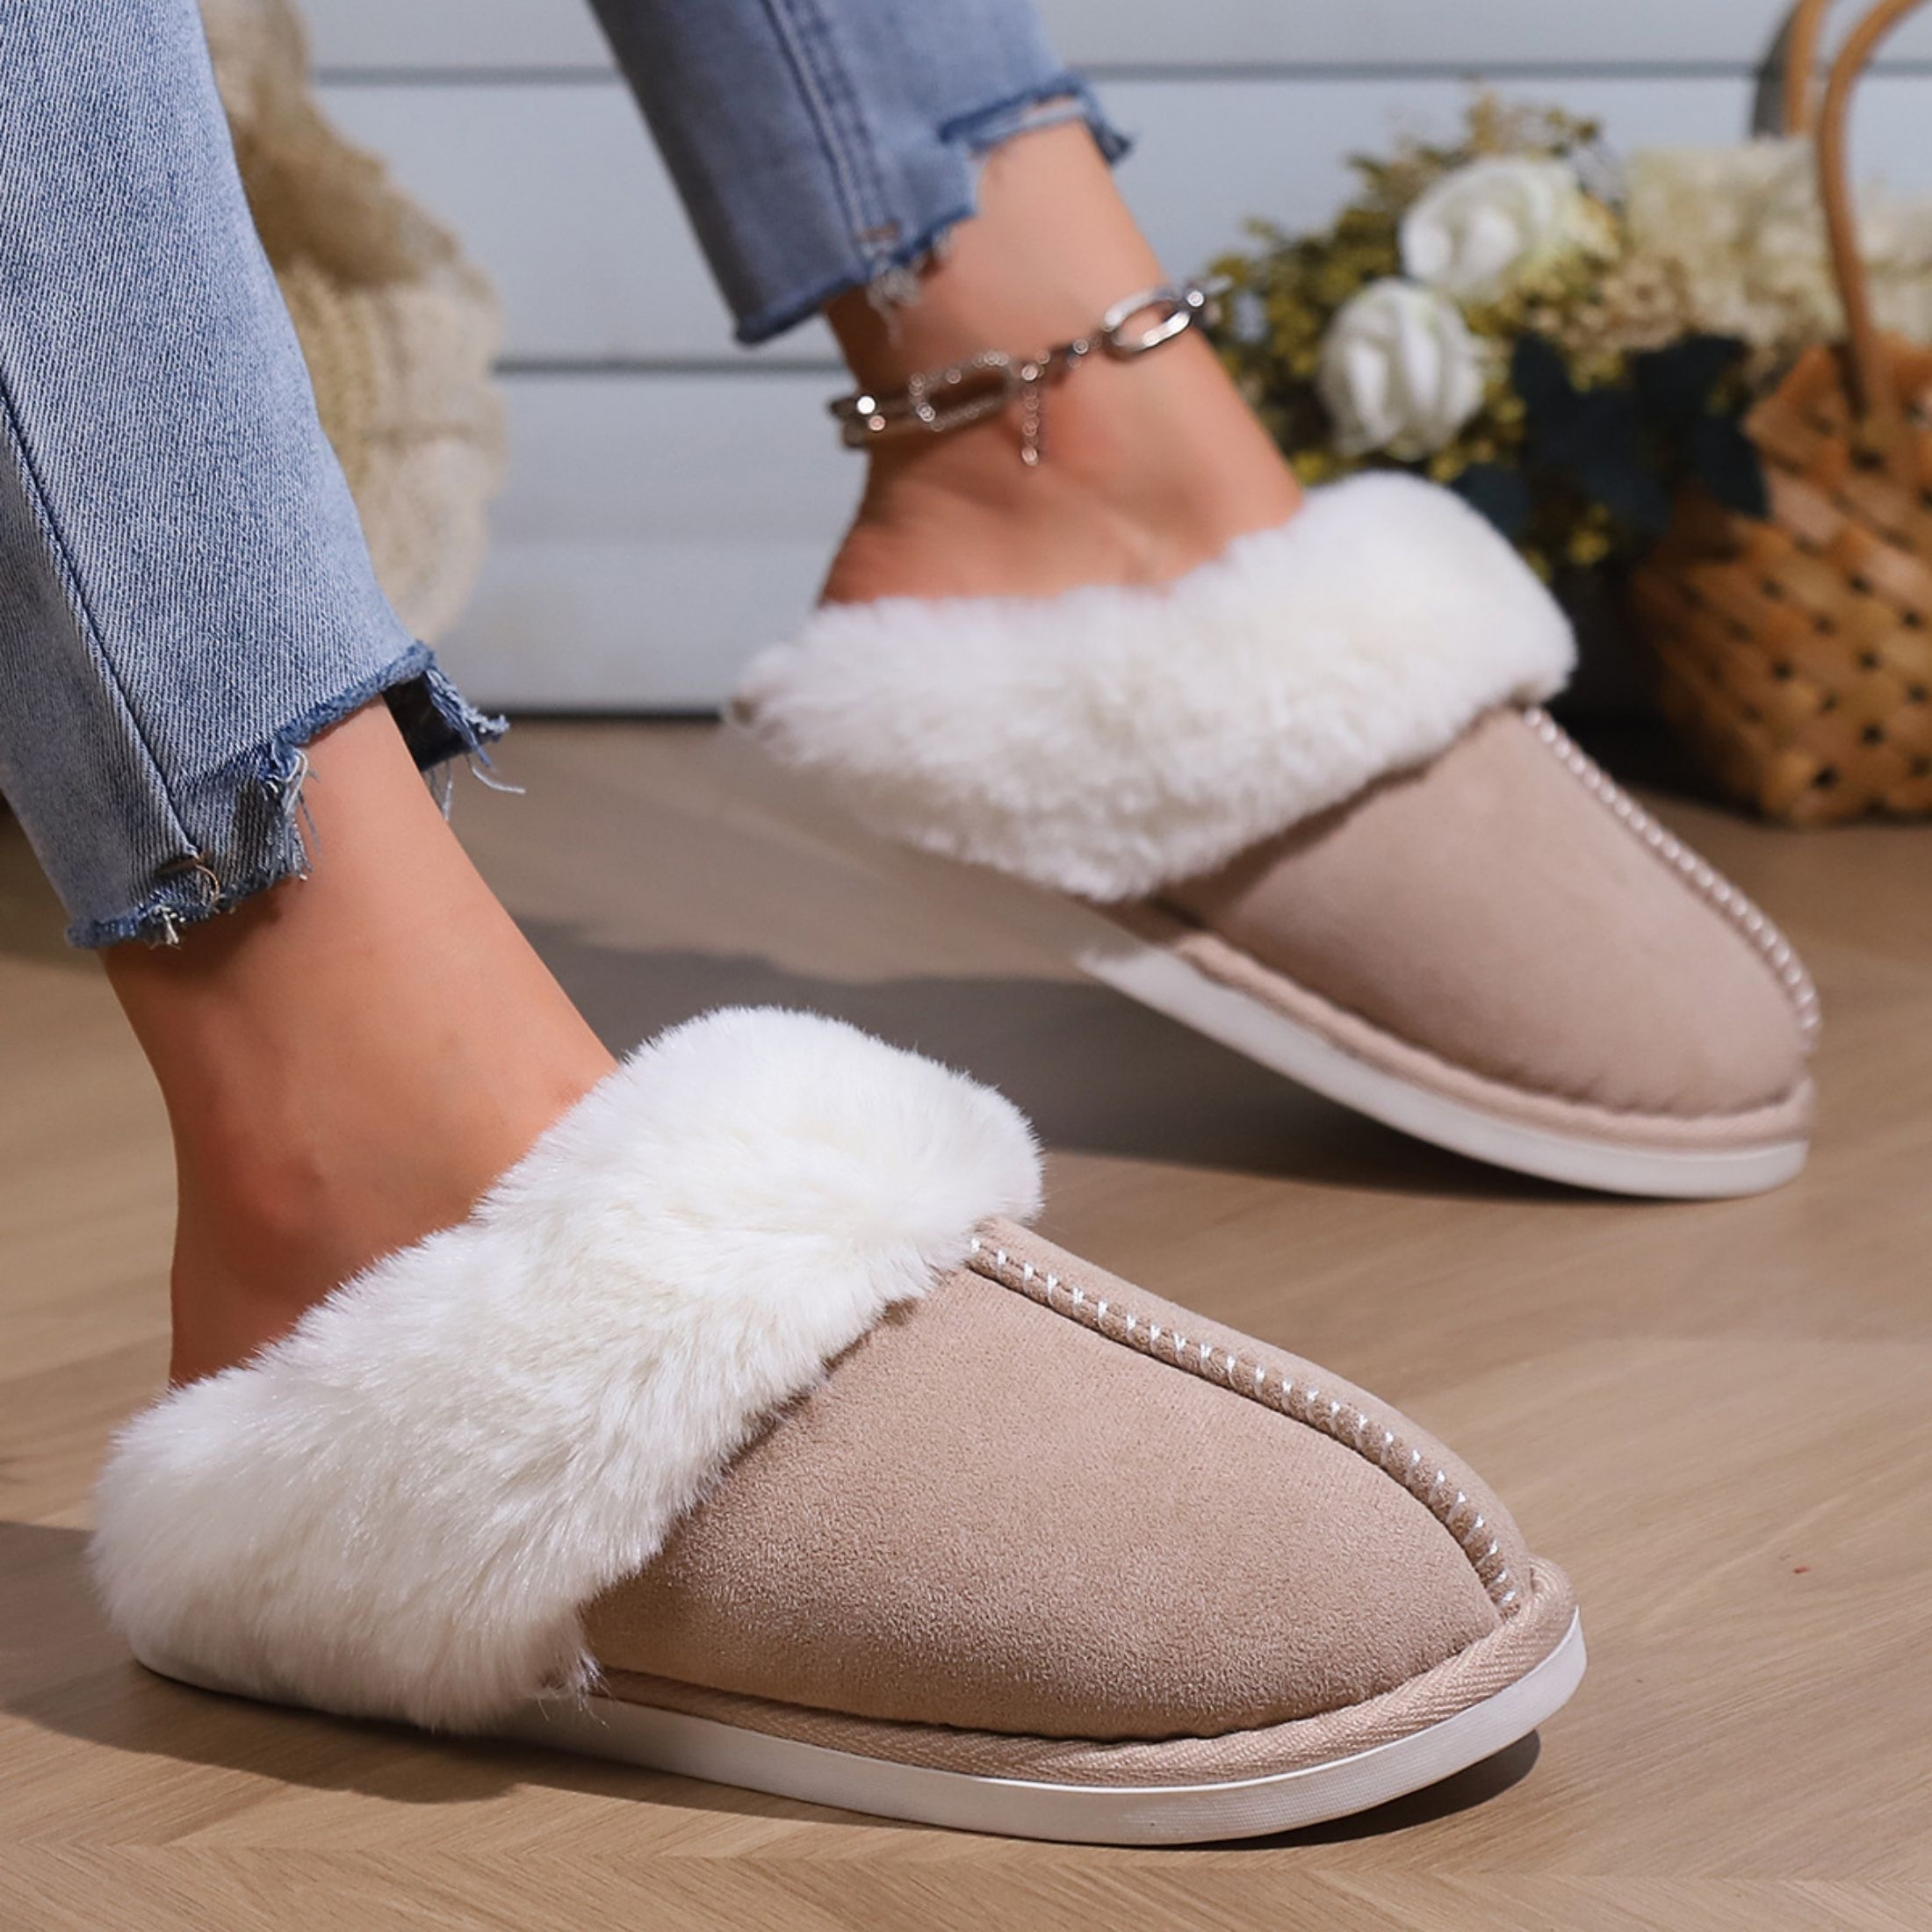 

Women's Flat Sandals, Home Warm Plush Lined Cozy Sandals, Comfort Non-slip Bedroom Sandals, Winter & Autumn